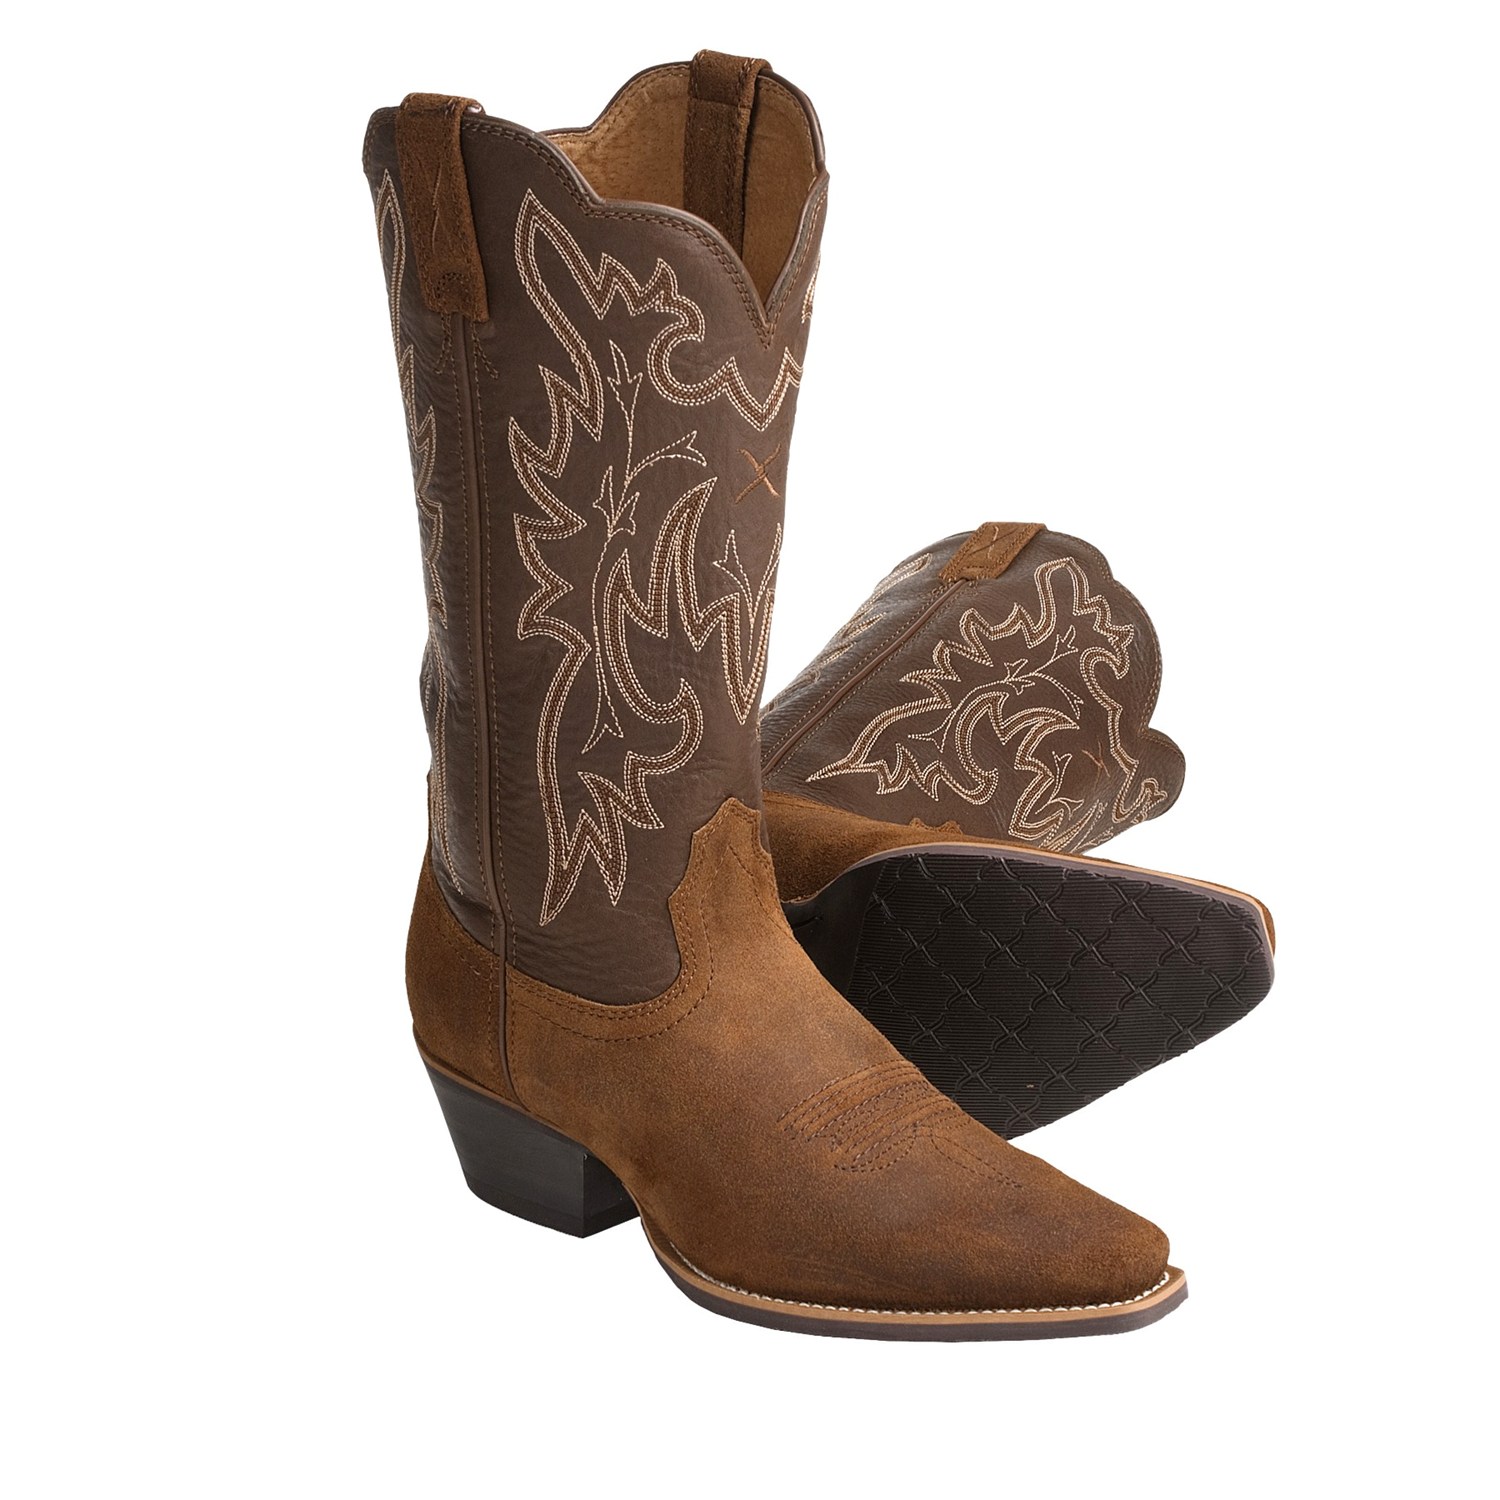 Http Www Sierratradingpost Com Twisted X Boots Western Cowboy Boots